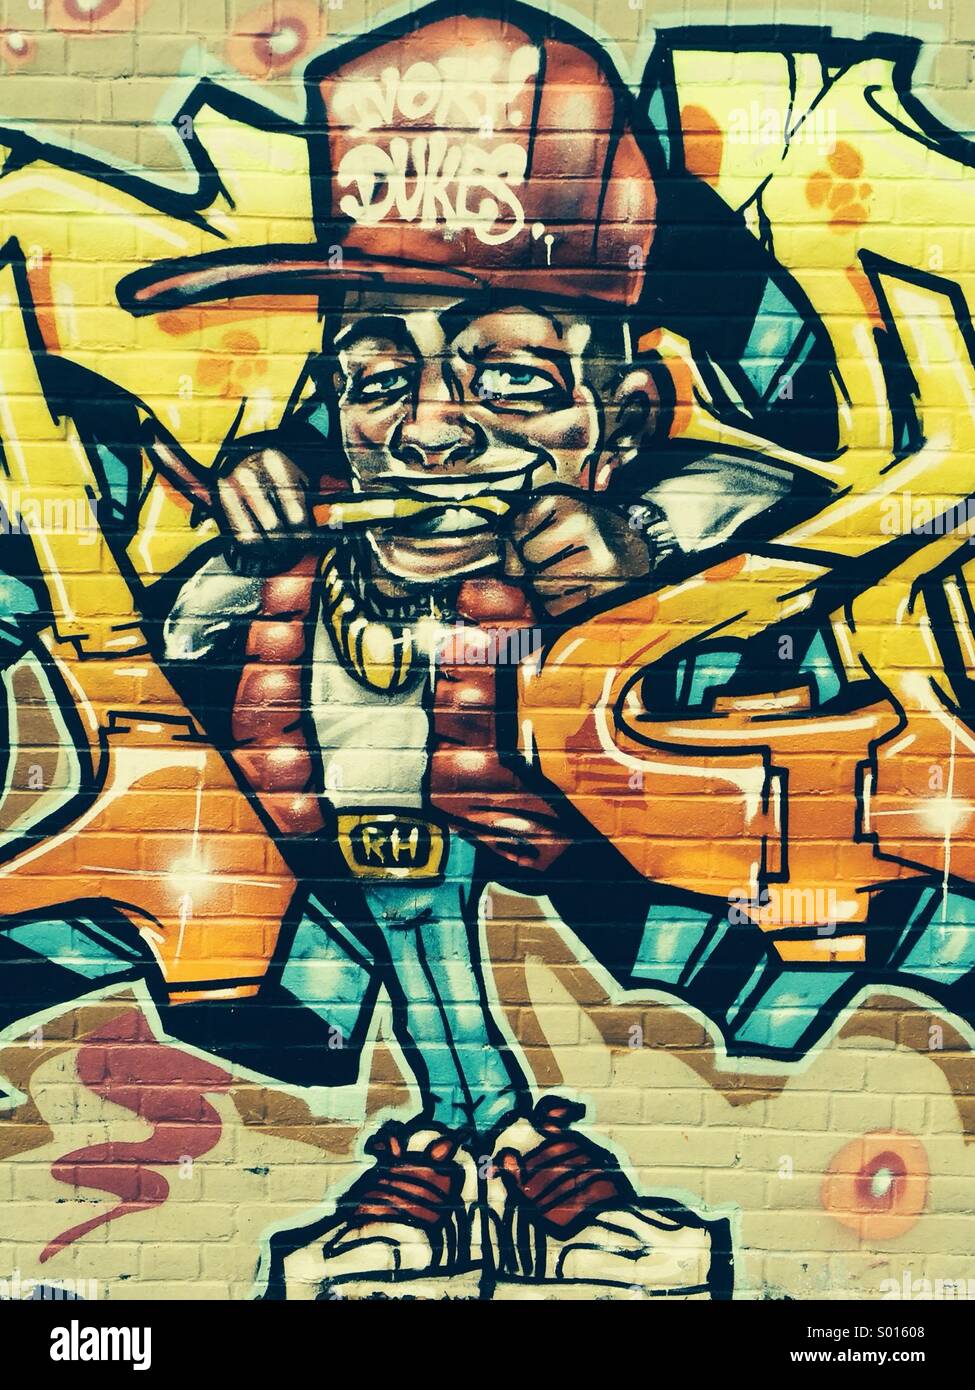 Street Art graffiti, Brick Lane Stock Photo